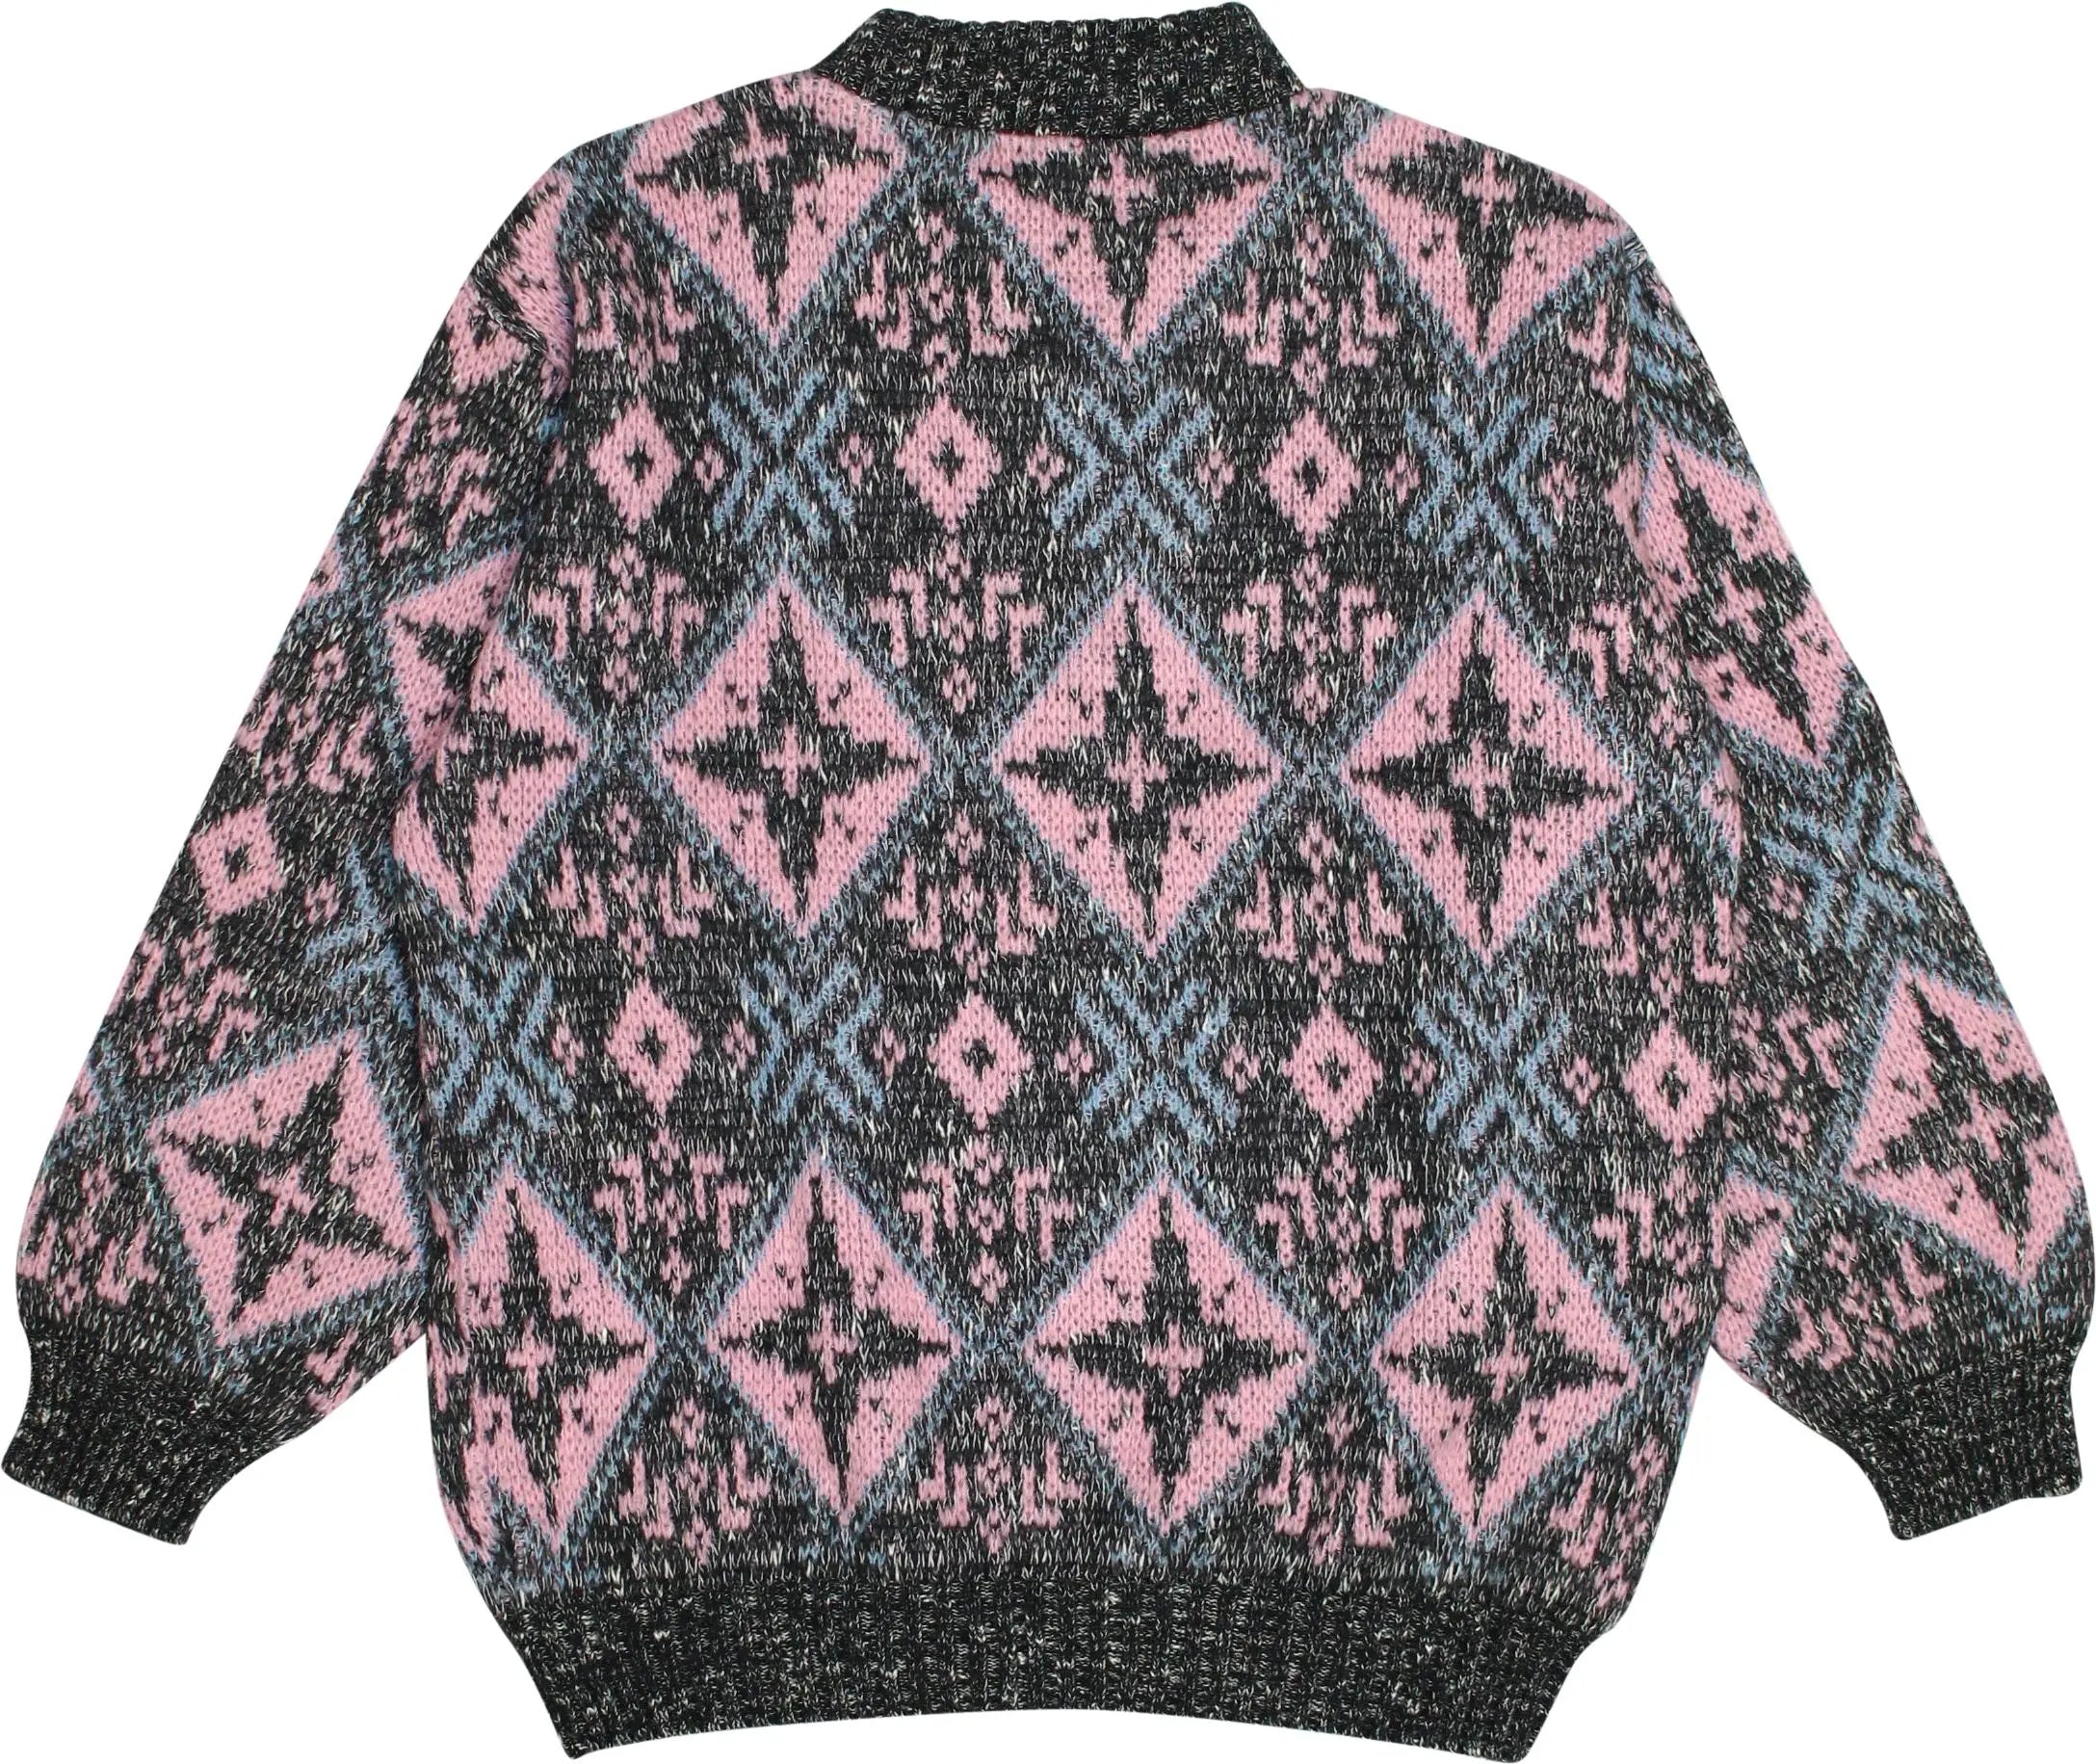 Charles Vögele - Knitted Jumper- ThriftTale.com - Vintage and second handclothing